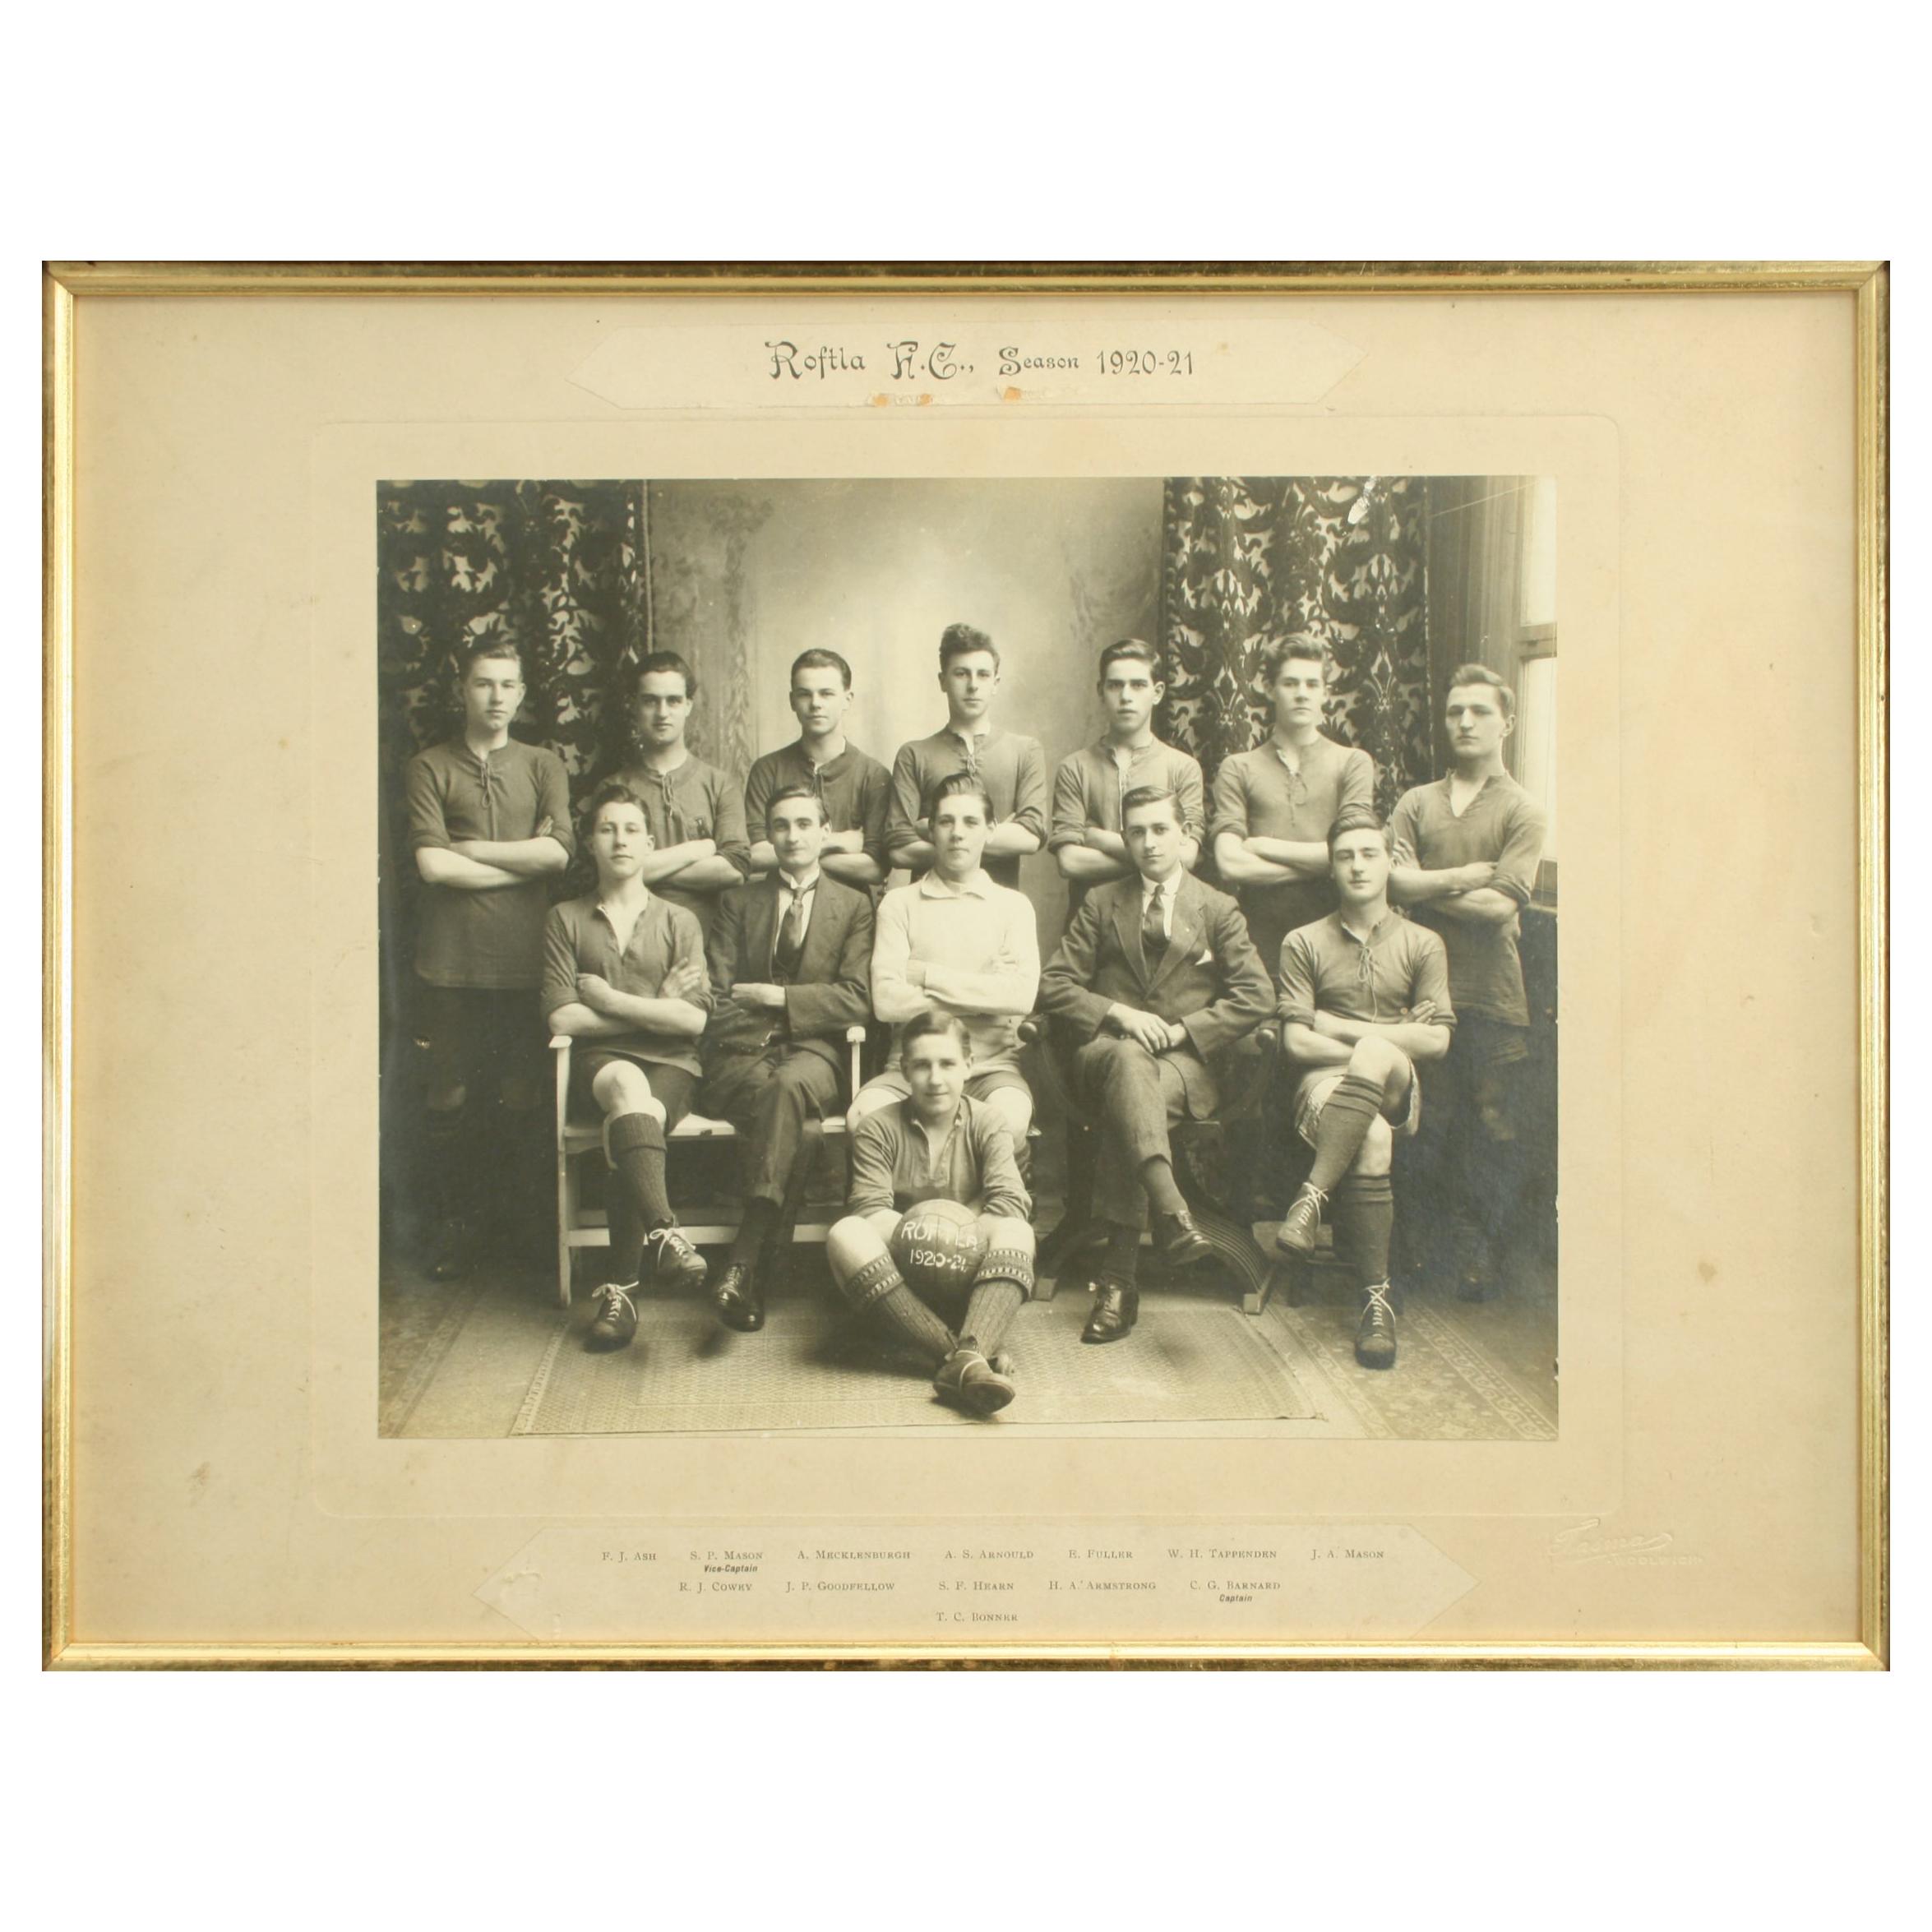 Original Antique Photograph, Football Team, Roftla F.C